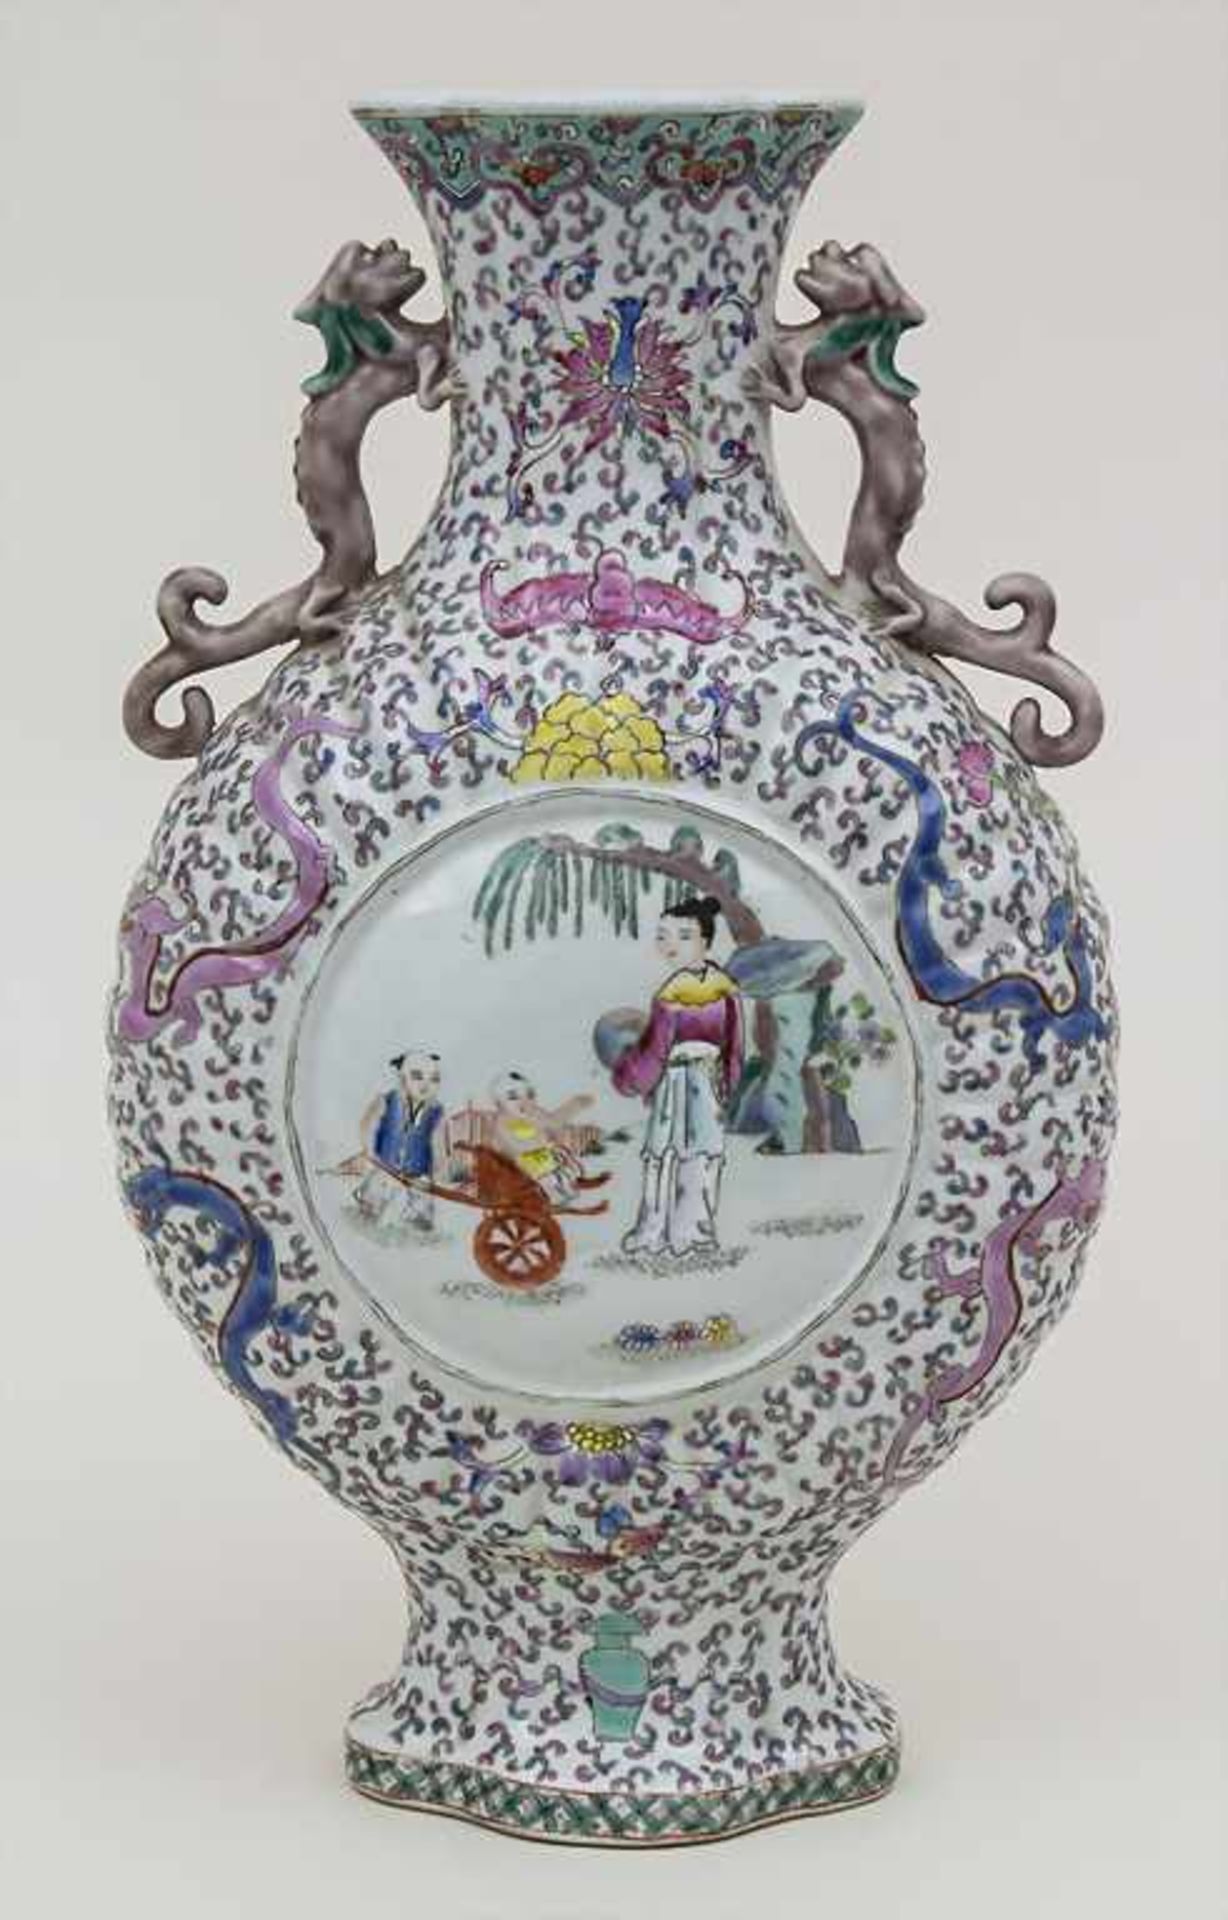 Ziervase Pilgerflasche / A decorative pilgrim's bottle or vase, China, 20. Jh. Material: